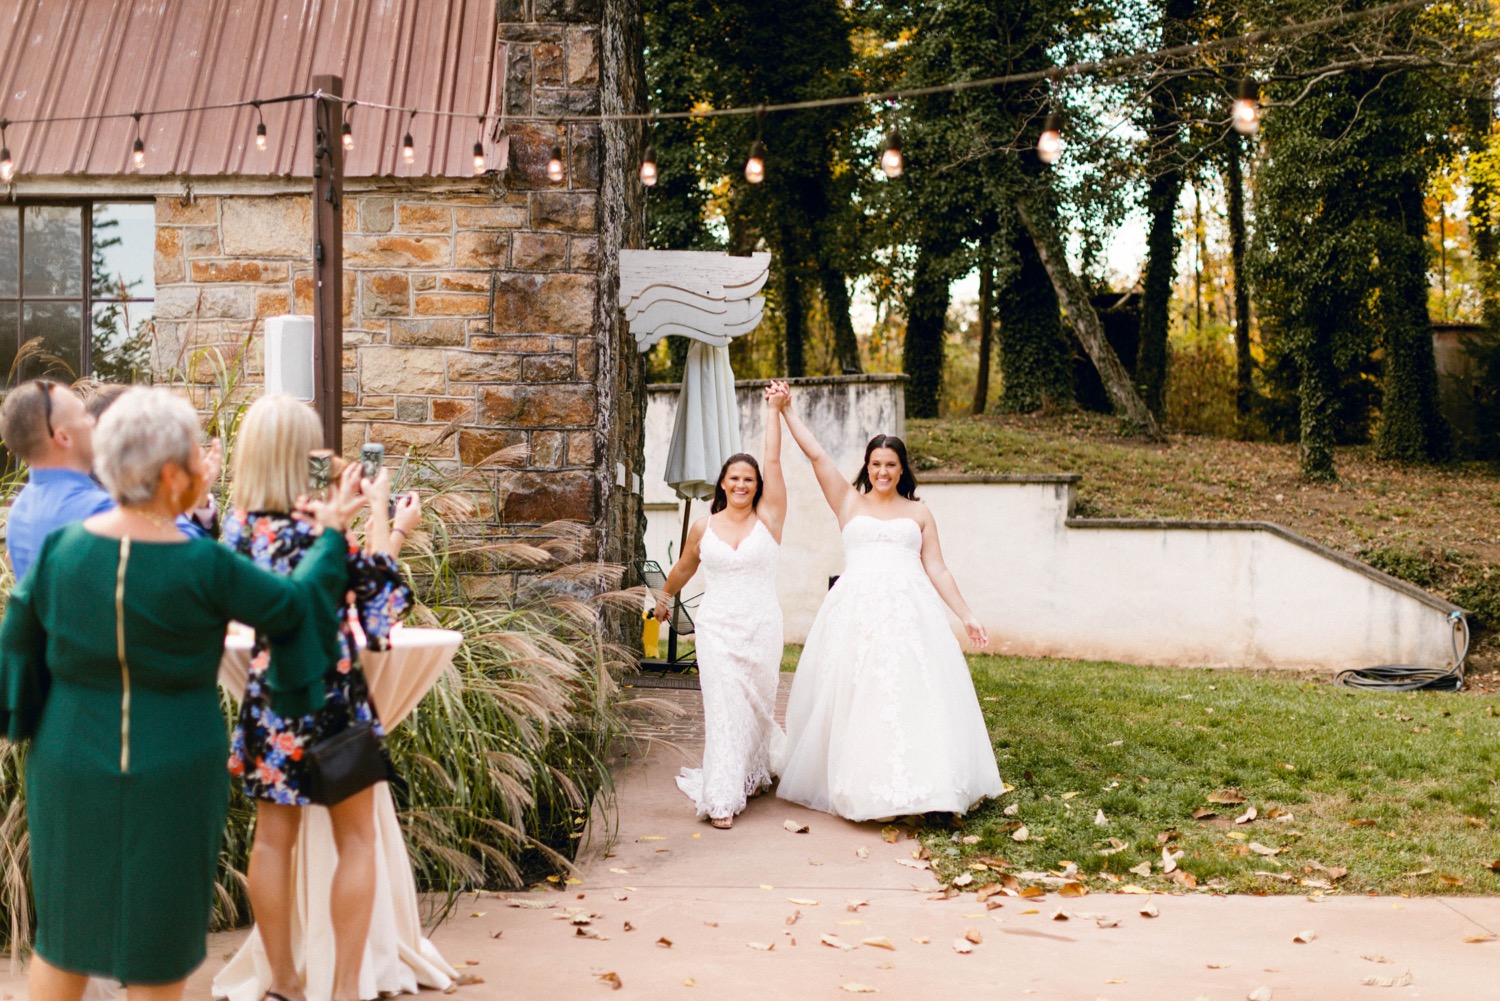 brides entrance into outdoor fall wedding reception